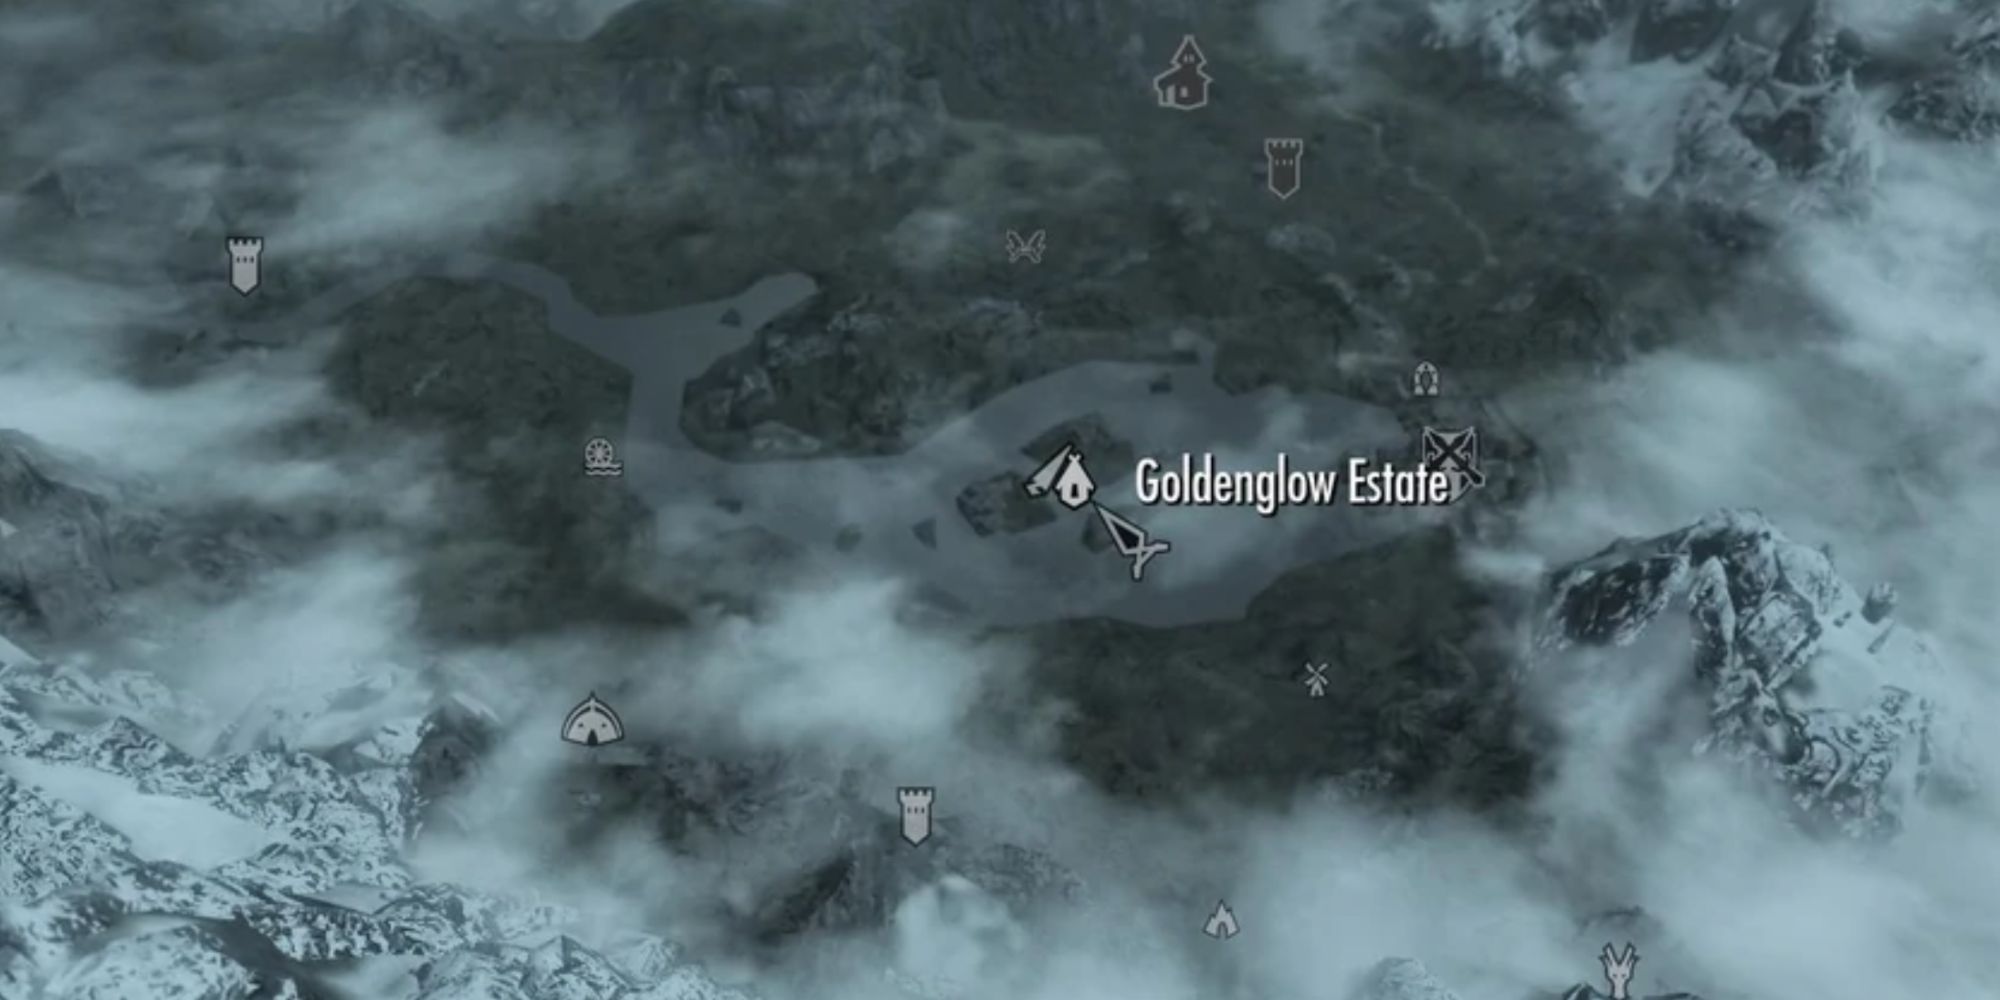 skyrim_goldenglow_estate_on_the_map